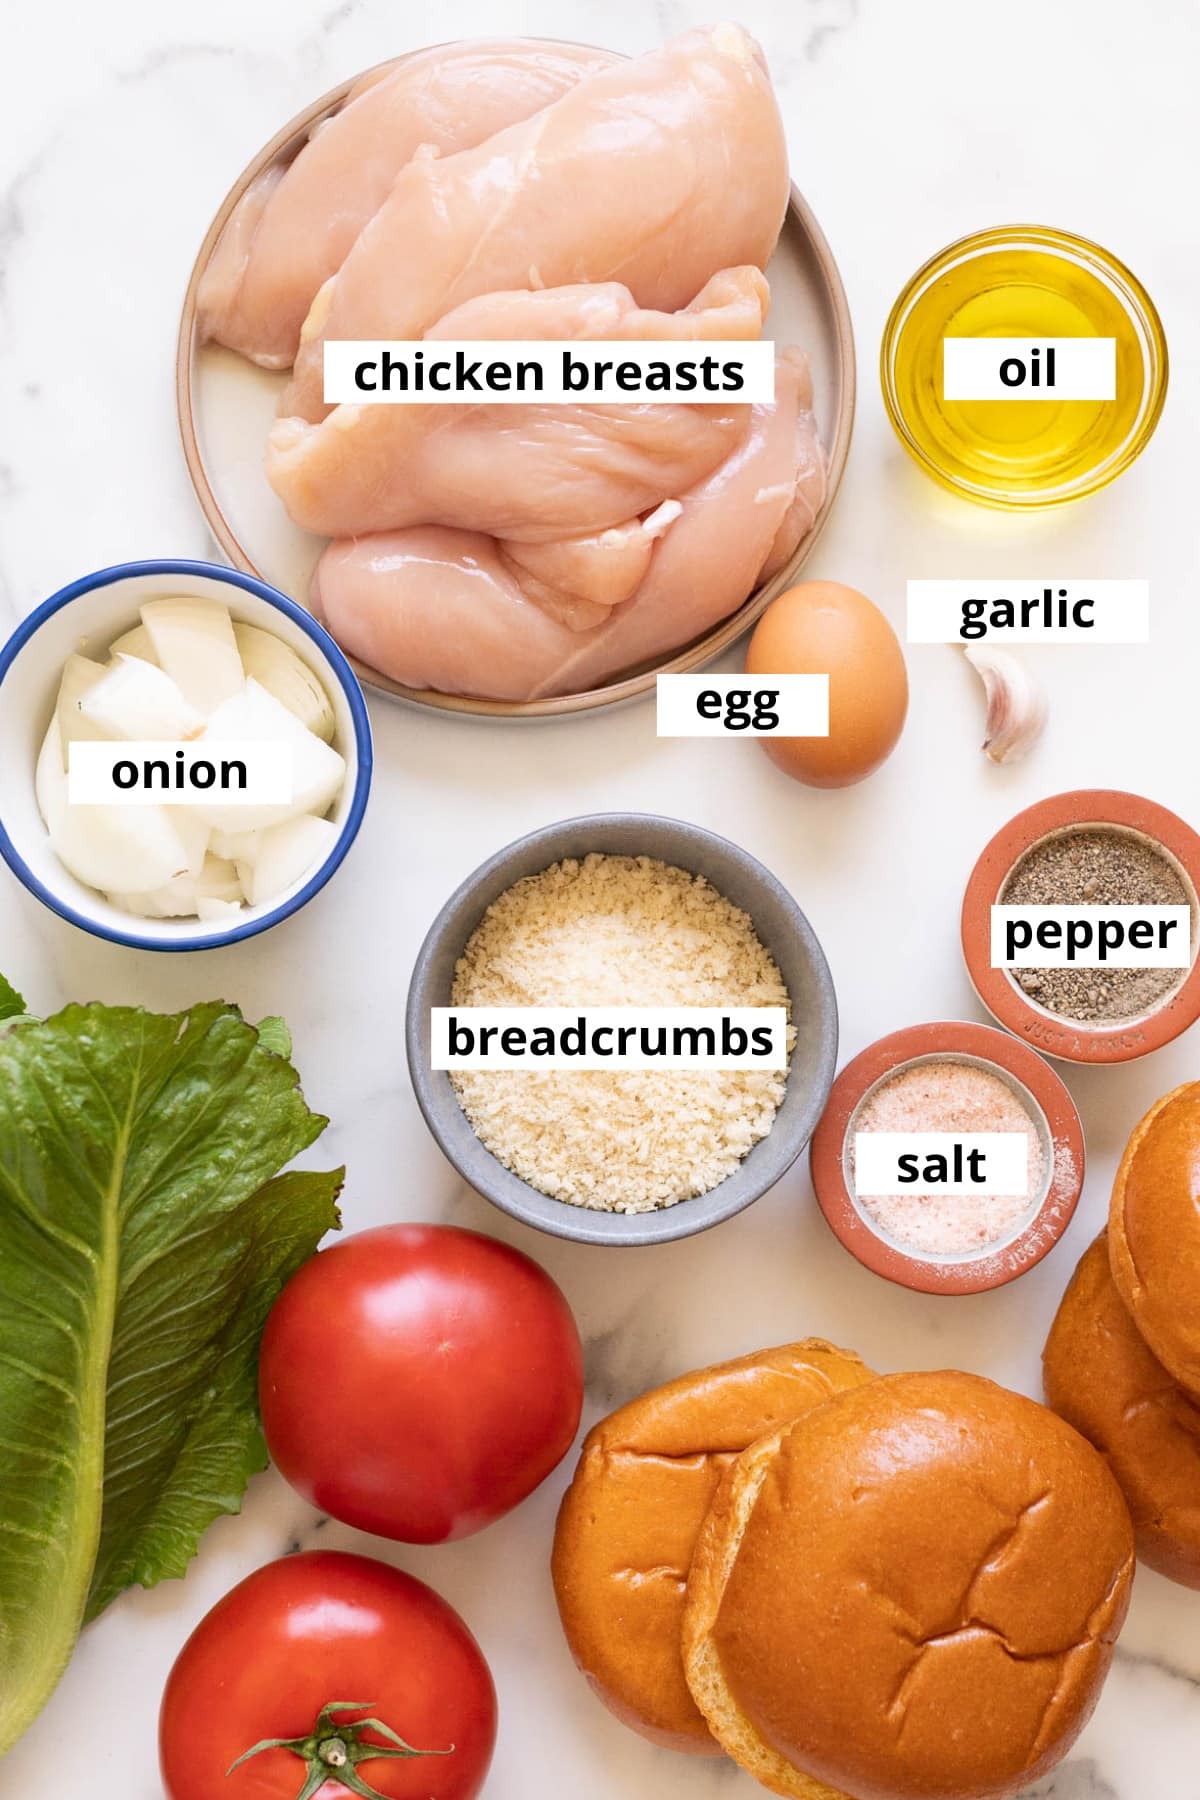 Chicken breasts, egg, garlic, onion, bread crumbs, salt and pepper.